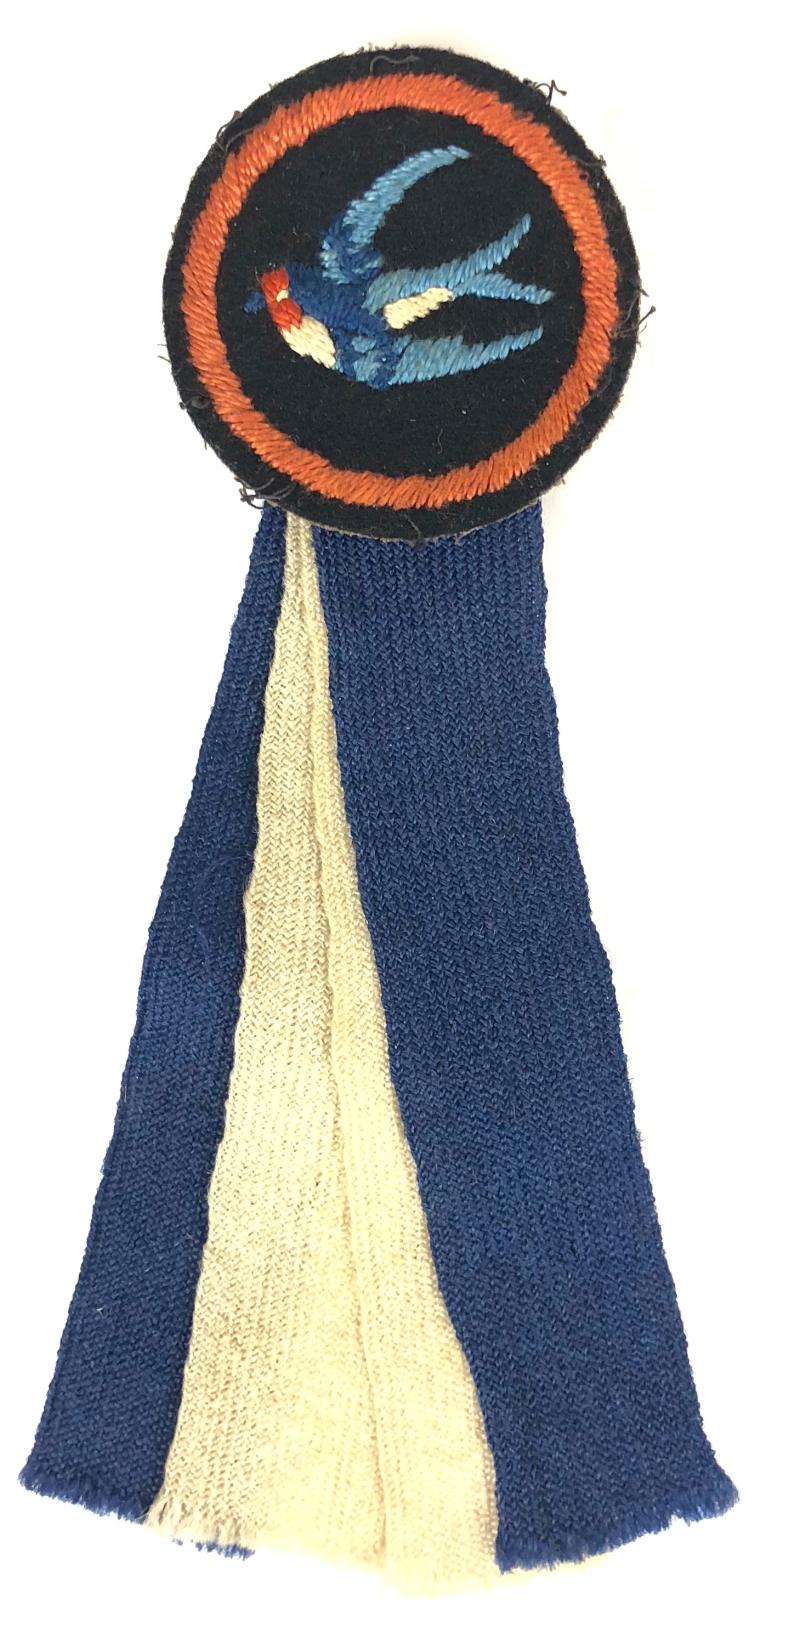 Girl Guides Swallow Bird Patrol Emblem Felt Cloth Badge & Knot c1925